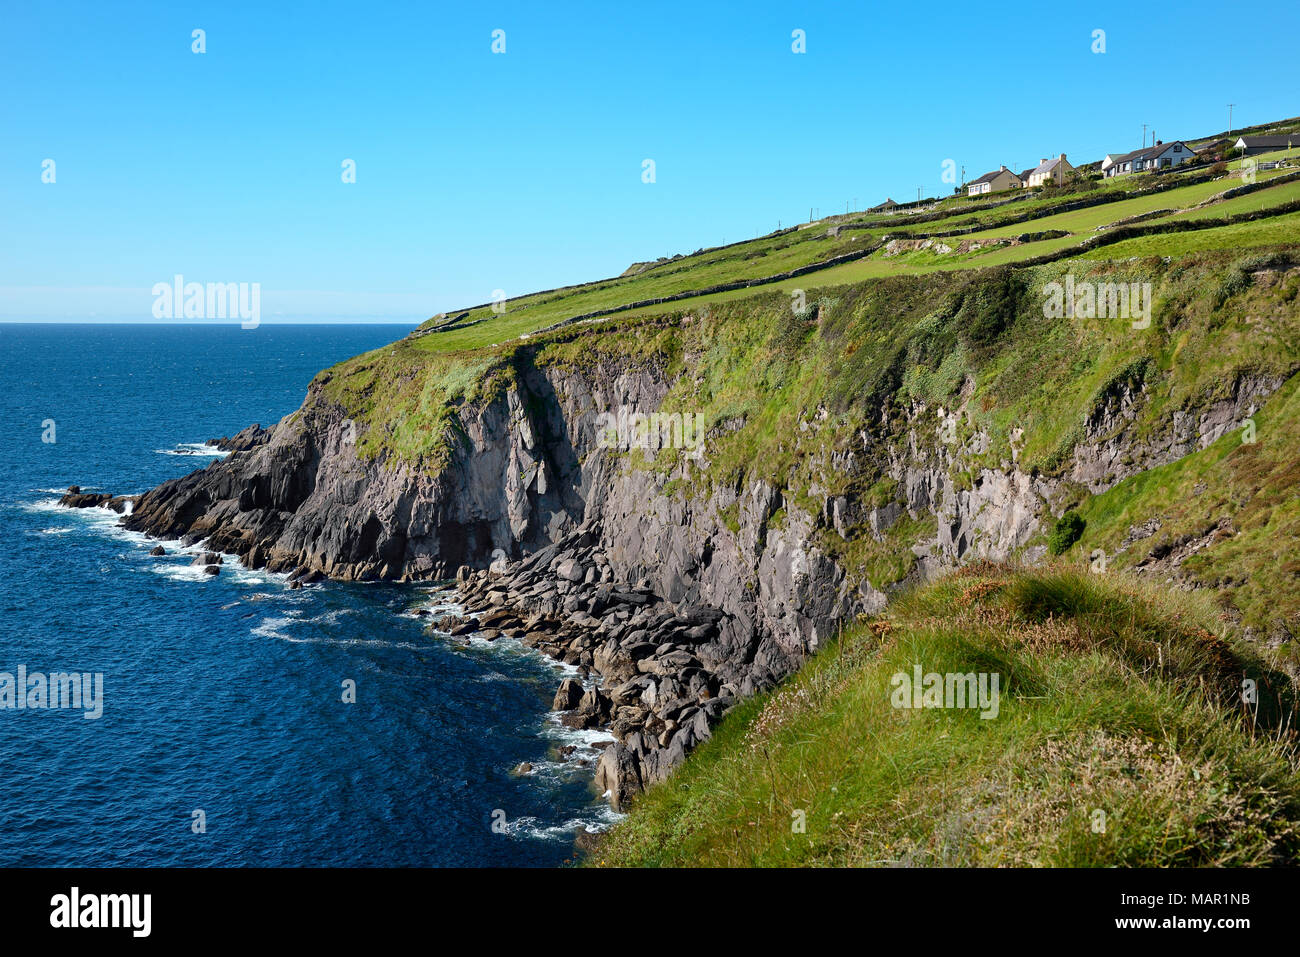 Dunbeg Promontory Fort, Slea Head Drive, Dingle Peninsula, Wild Atlantic Way, County Kerry, Munster, Republic of Ireland, Europe Stock Photo